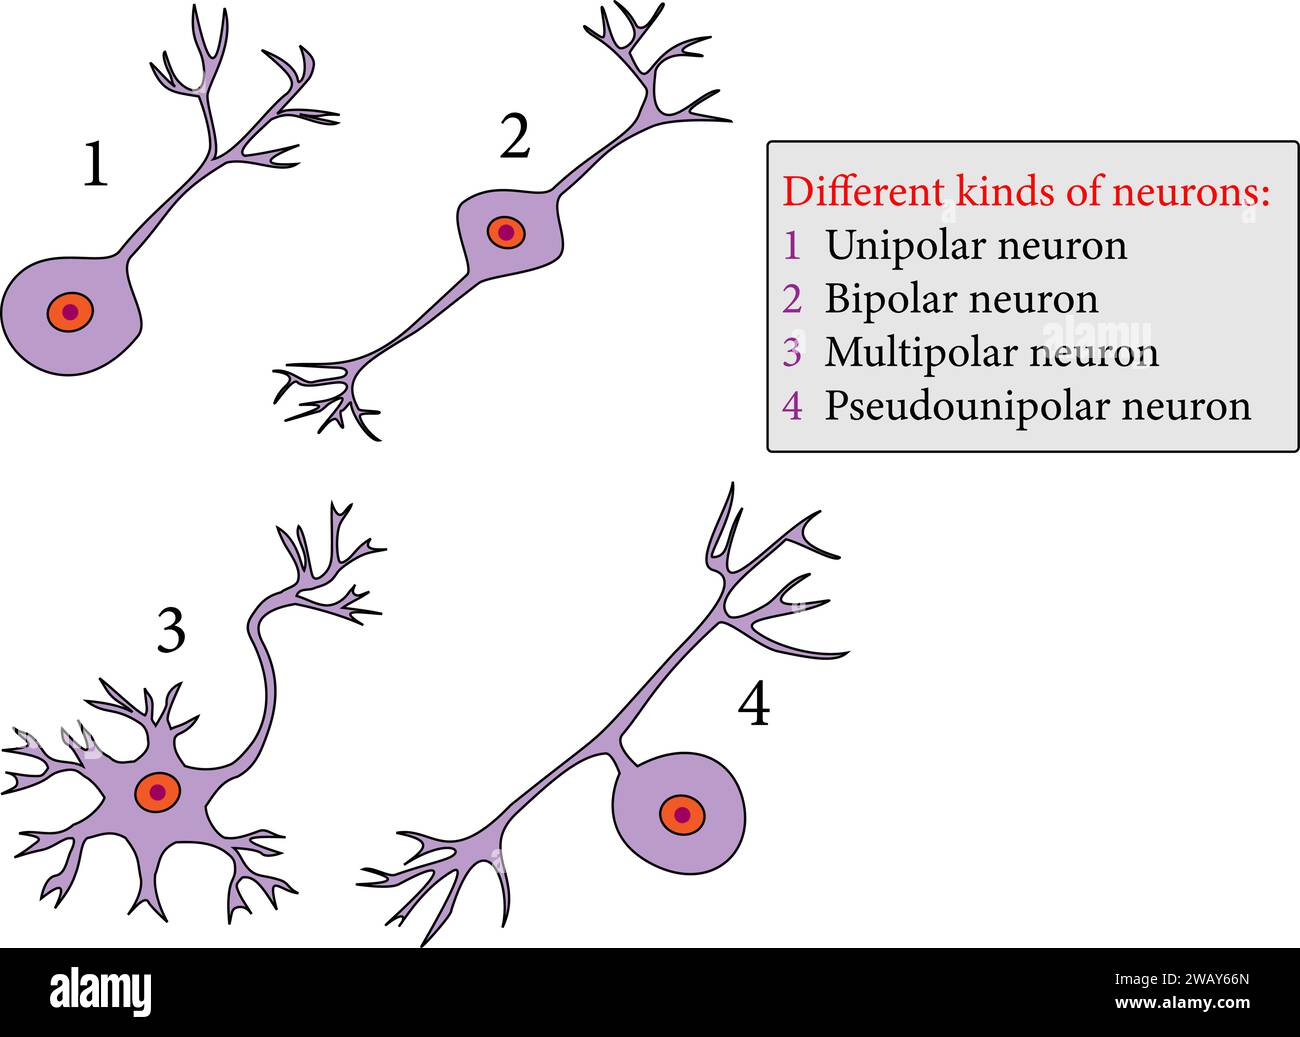 Arten von Neuronen: Unipolare Neurone, bipolare Neurone, multipolare Neurone, Pseudounipolare Neurone.Vektor-Illustration. Stock Vektor